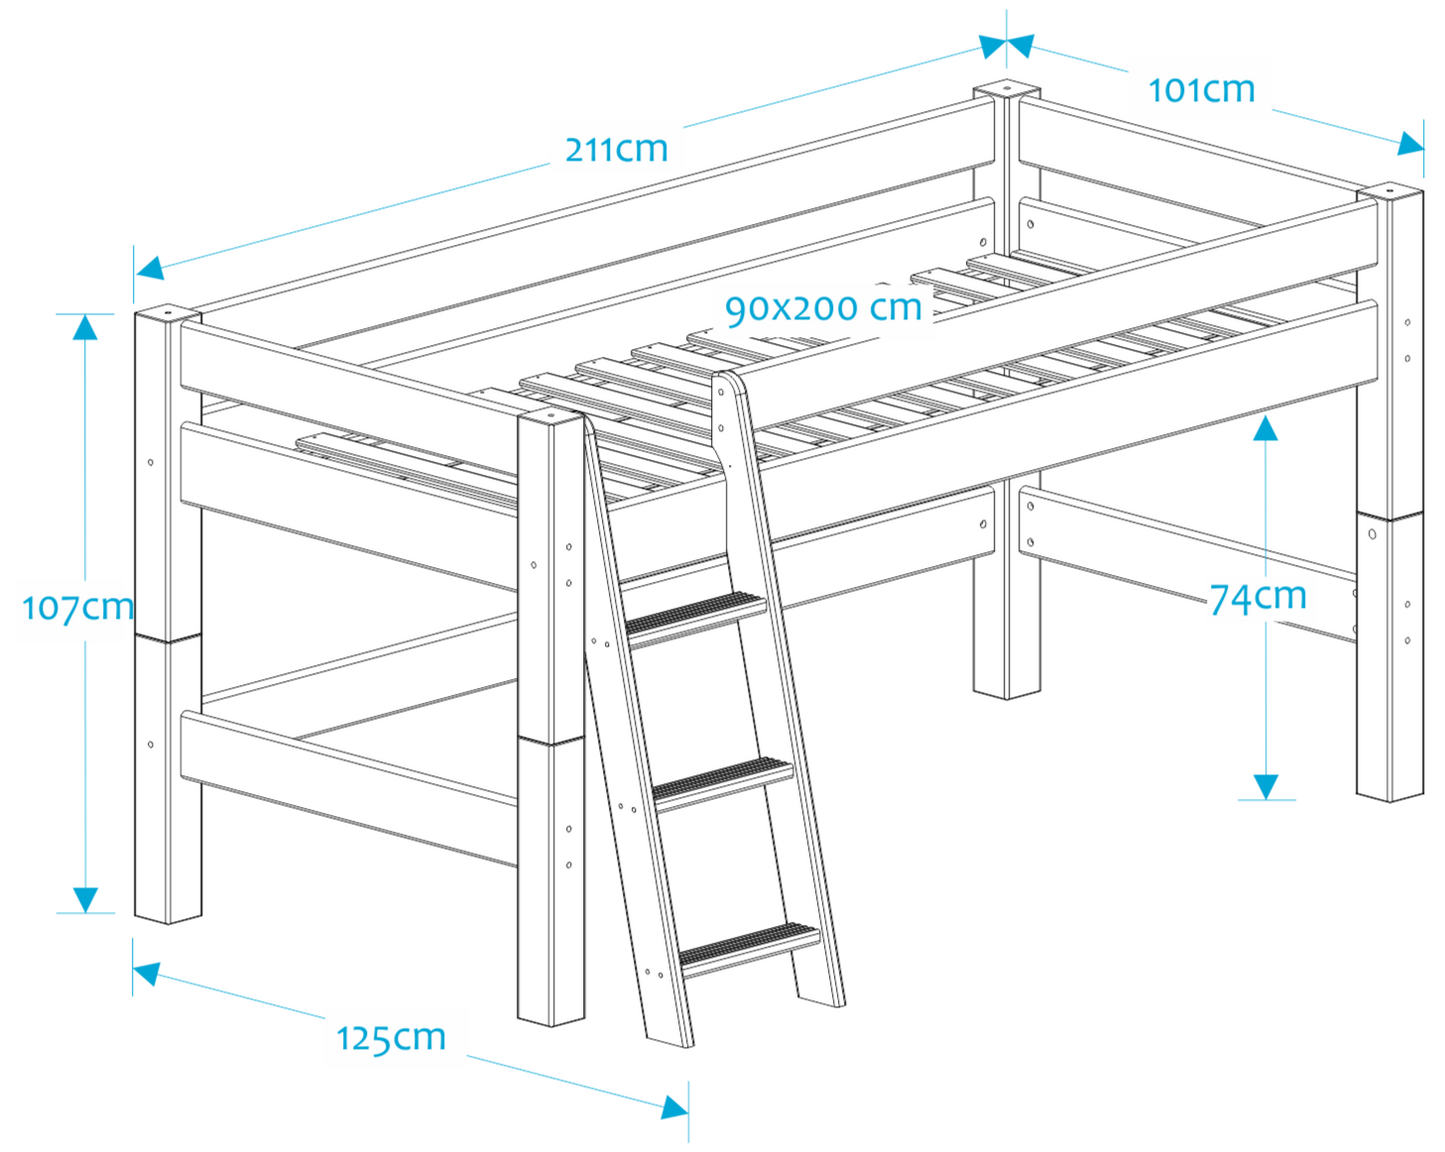 Lahe - Half high bed with slant ladder - 90x200 cm - White